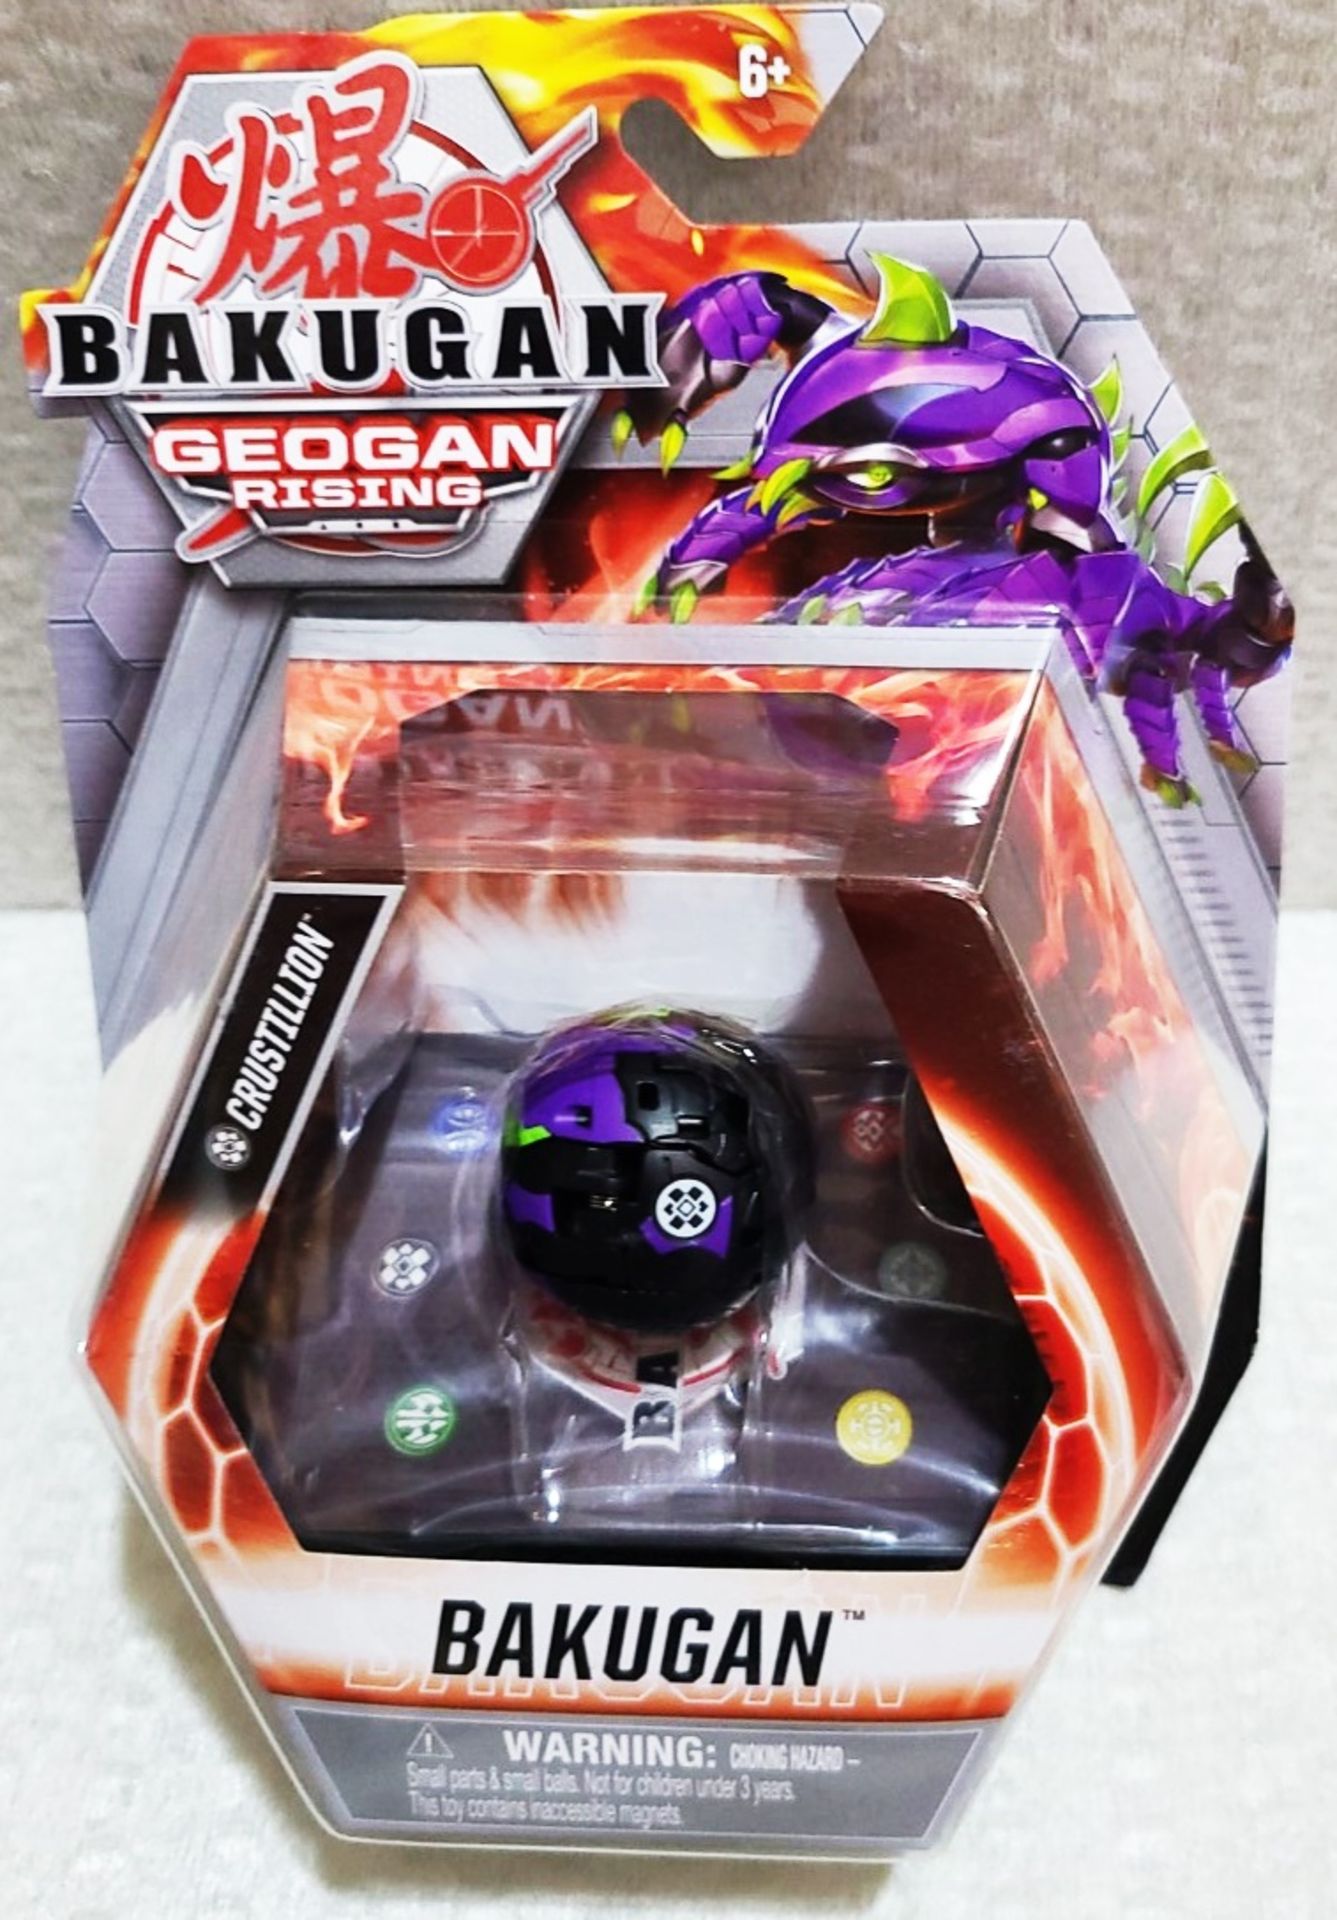 2 x BAKUGAN Bakugan Geogan Rising - Core Collectible Action Figures - Image 5 of 6